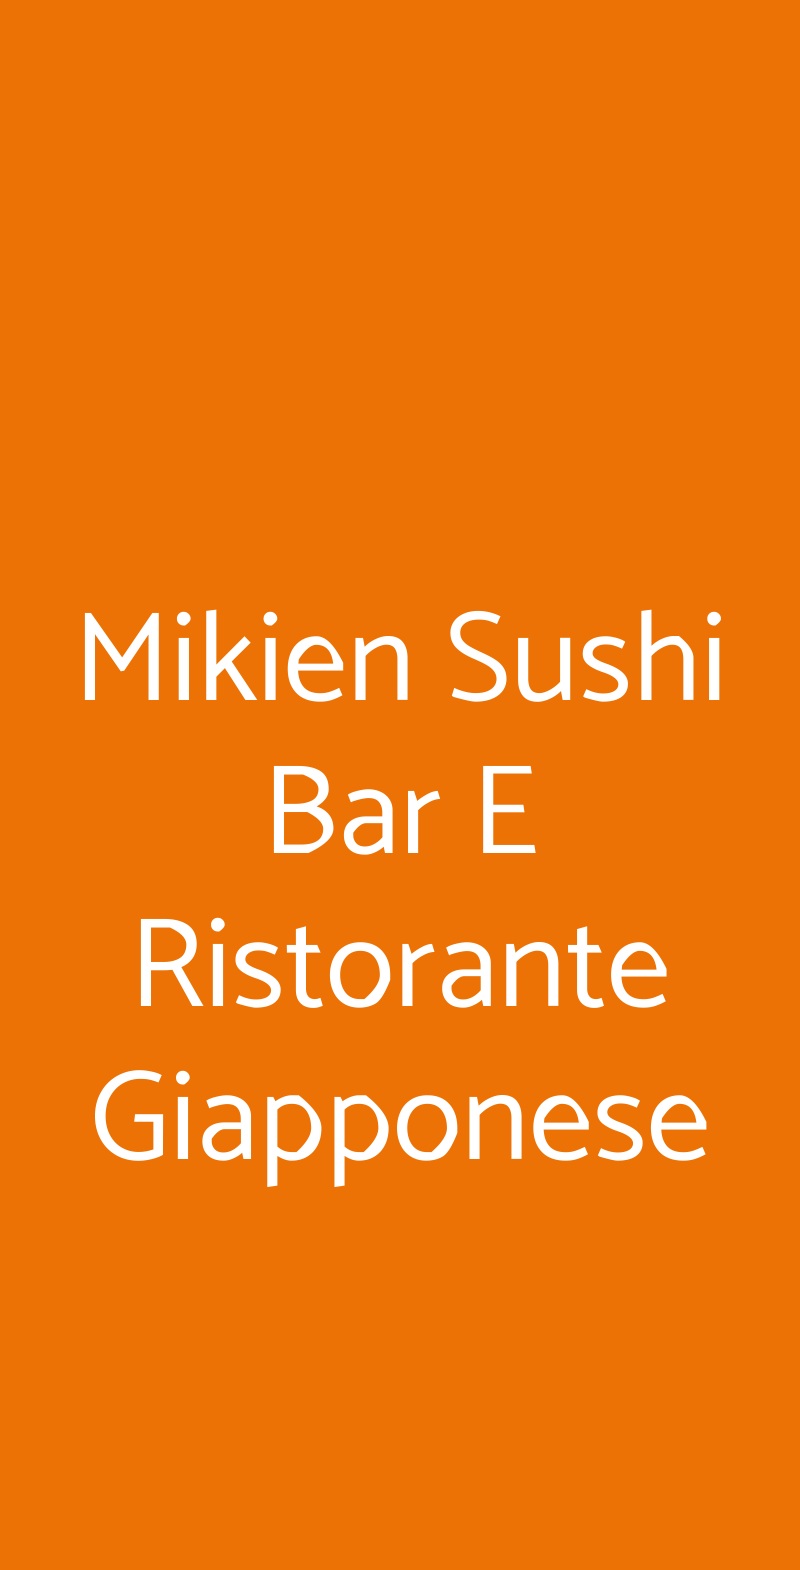 Mikien Sushi Bar E Ristorante Giapponese Torino menù 1 pagina